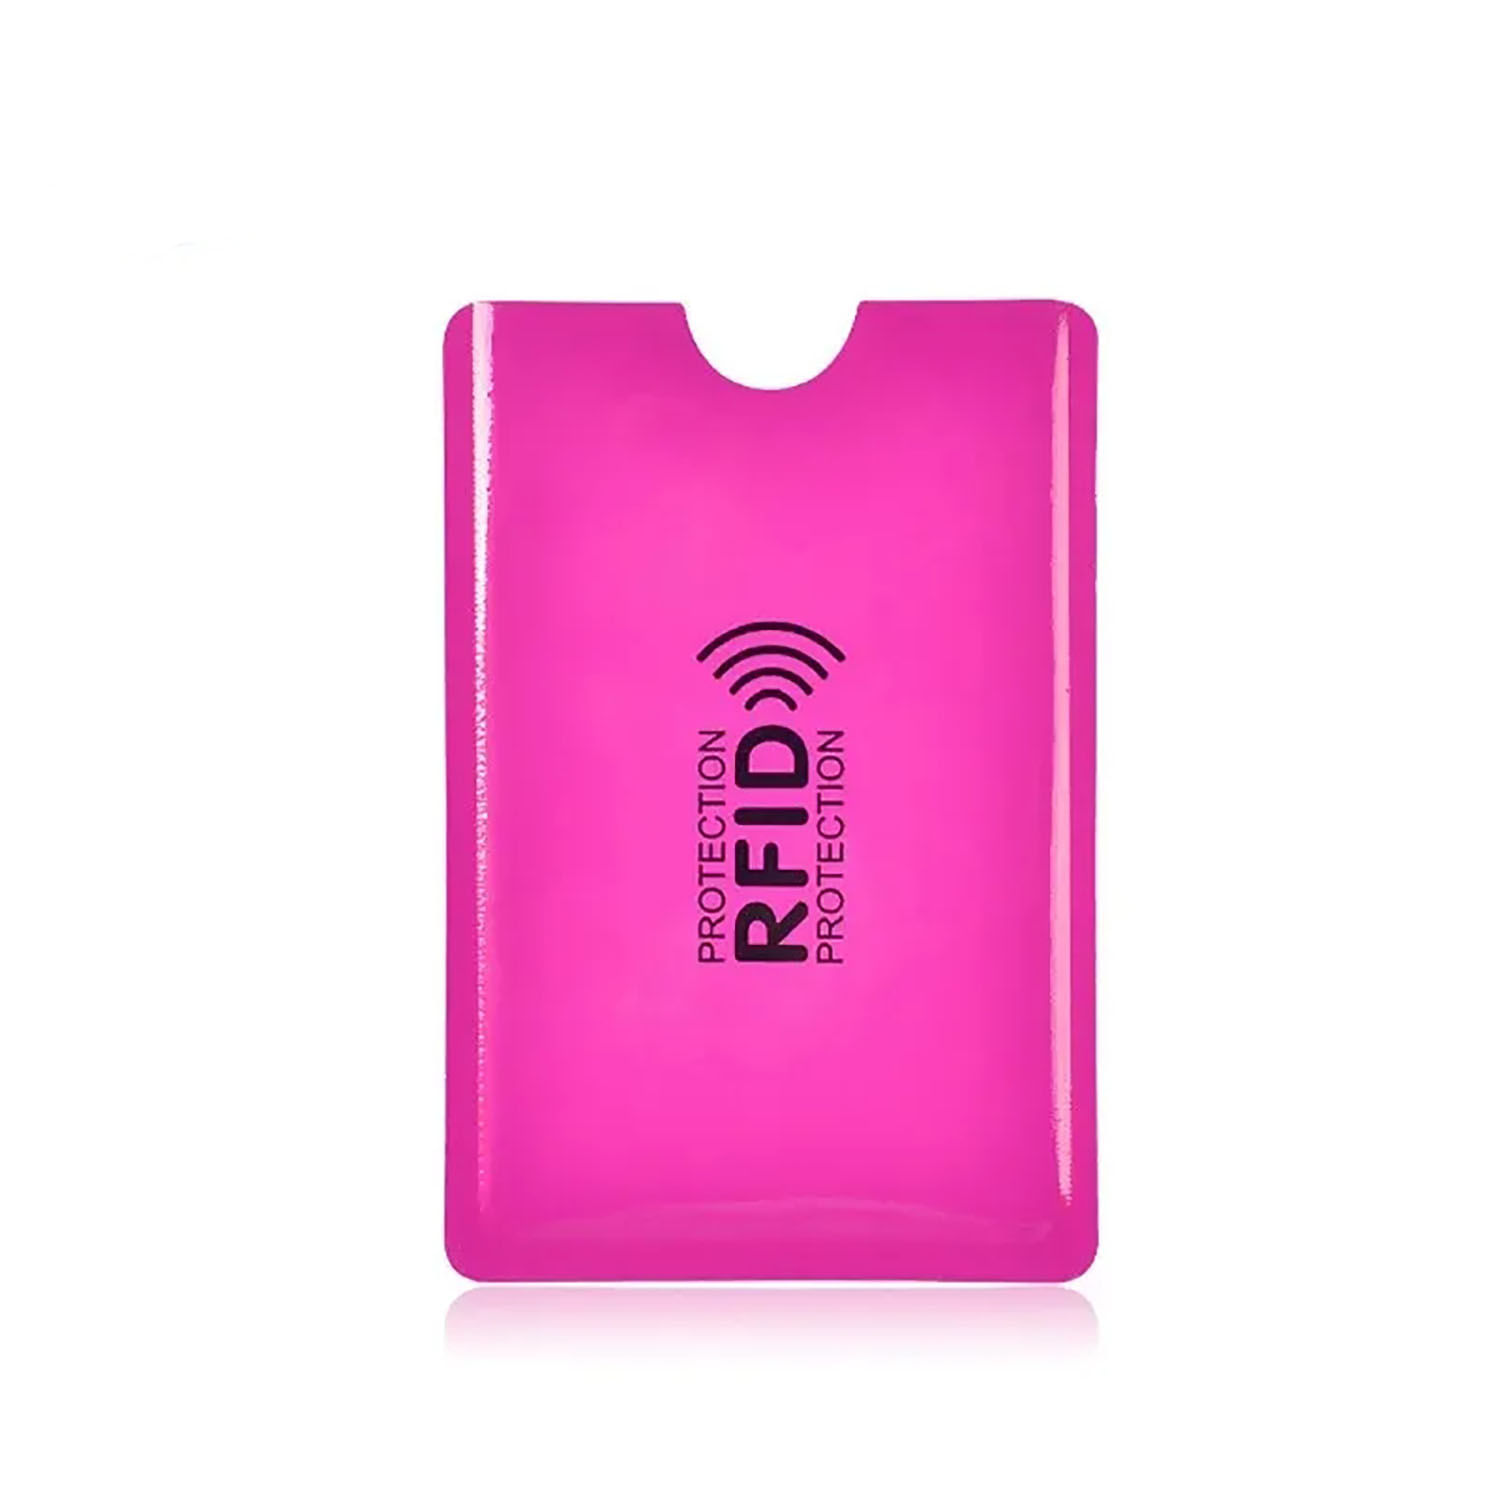 Funda Protectora Tarjeta Crédito RFID Anti robo Pack 3 Piezas Rosado